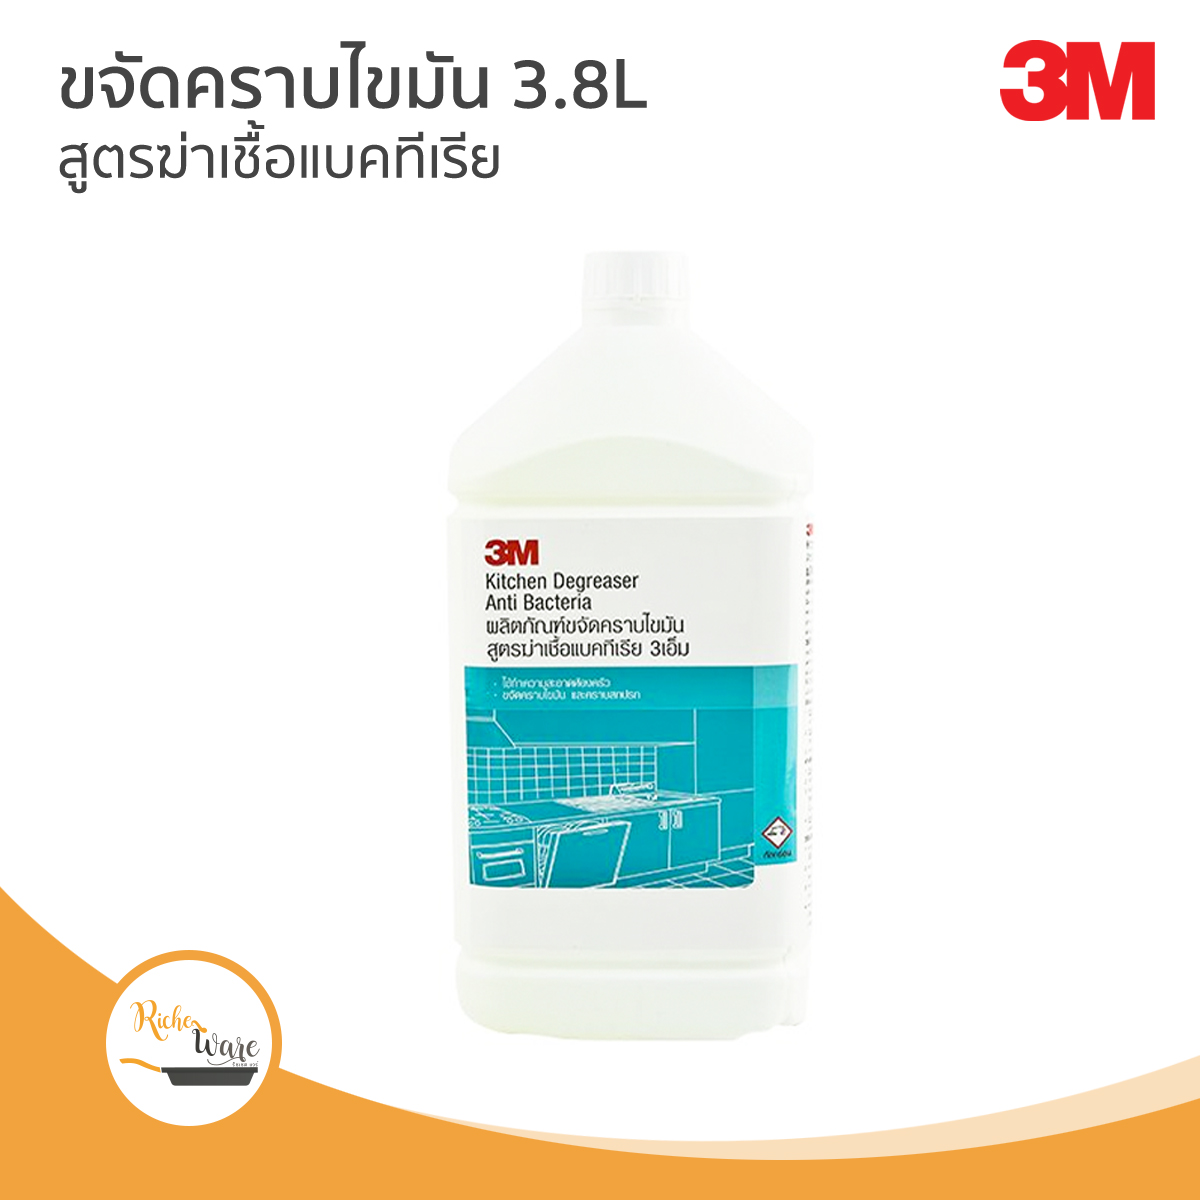 3M ผลิตภัณฑ์ขจัดคราบไขมัน สูตรฆ่าเชื้อแบคทีเรีย ขนาด 3.8 ลิตร 3M Antibac Kitchen Degreaser  3.8L